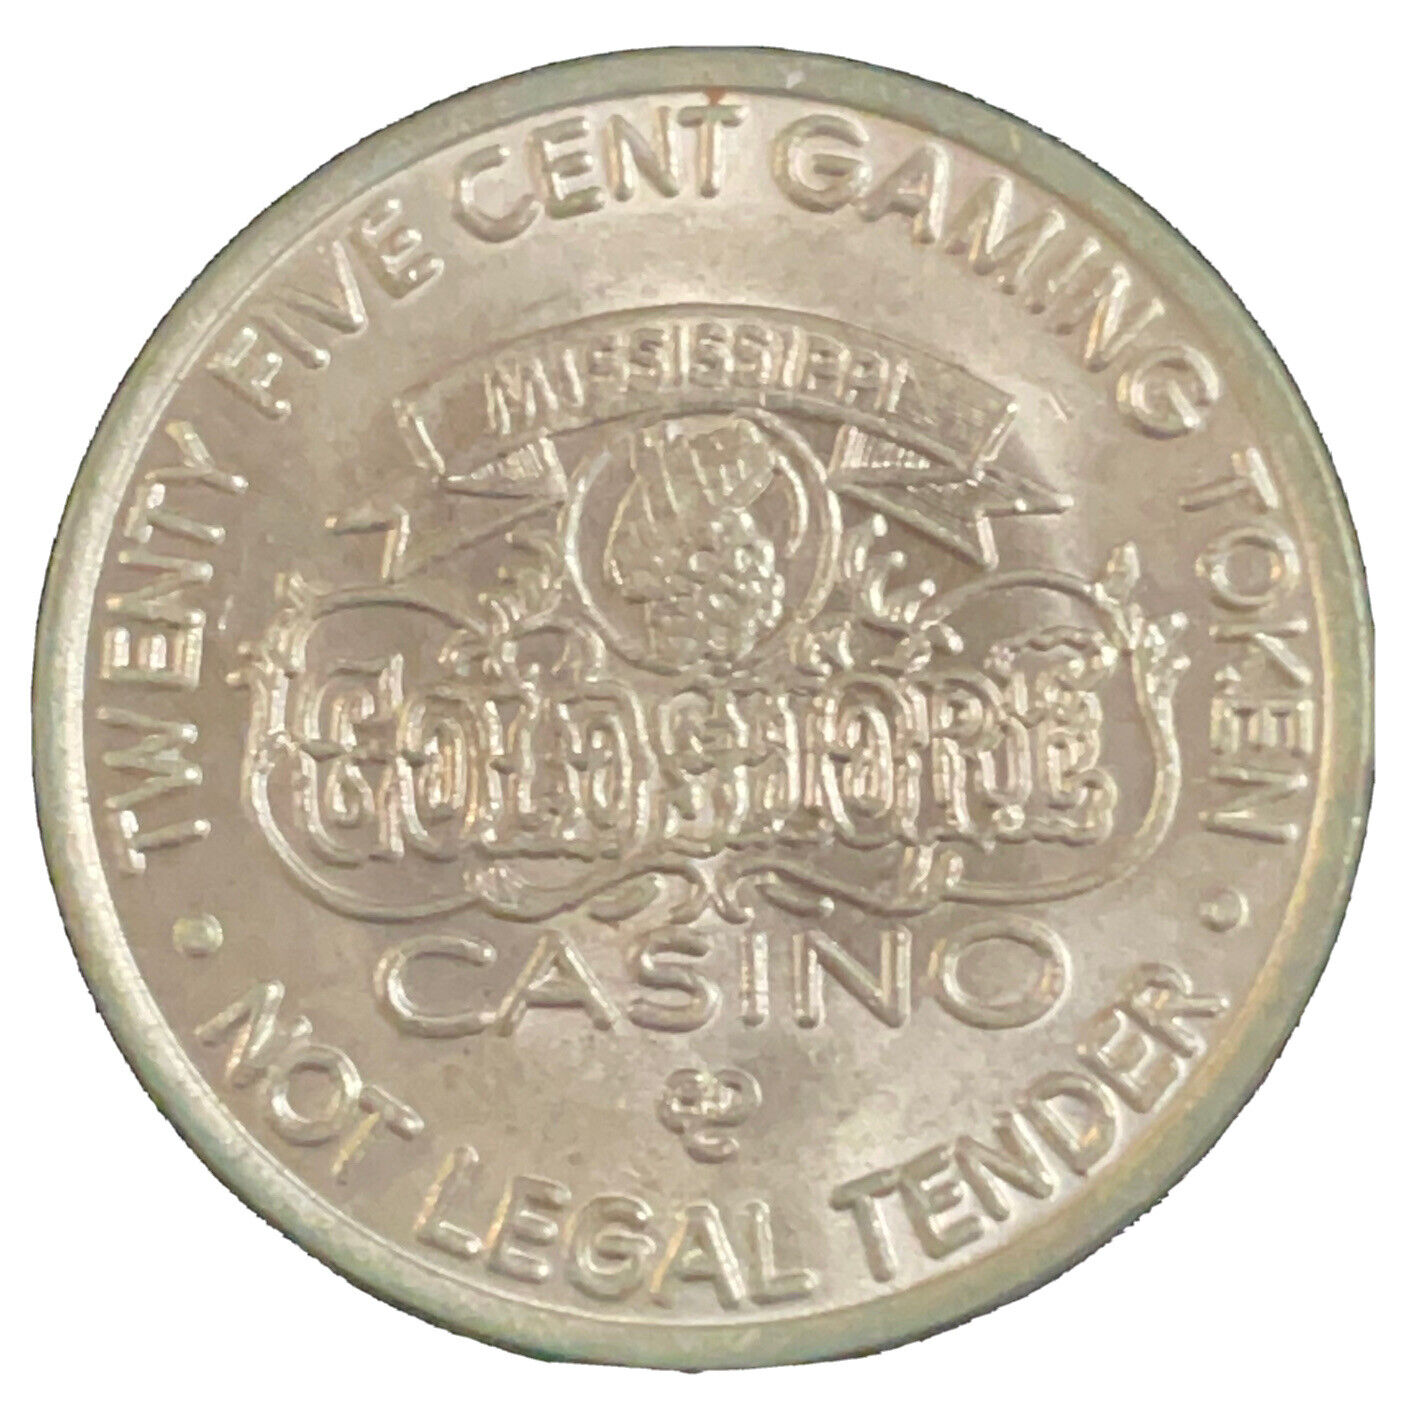 Gold Shore Casino Boat Biloxi Mississippi Vintage 25¢ Gaming Token Coin 1994-95